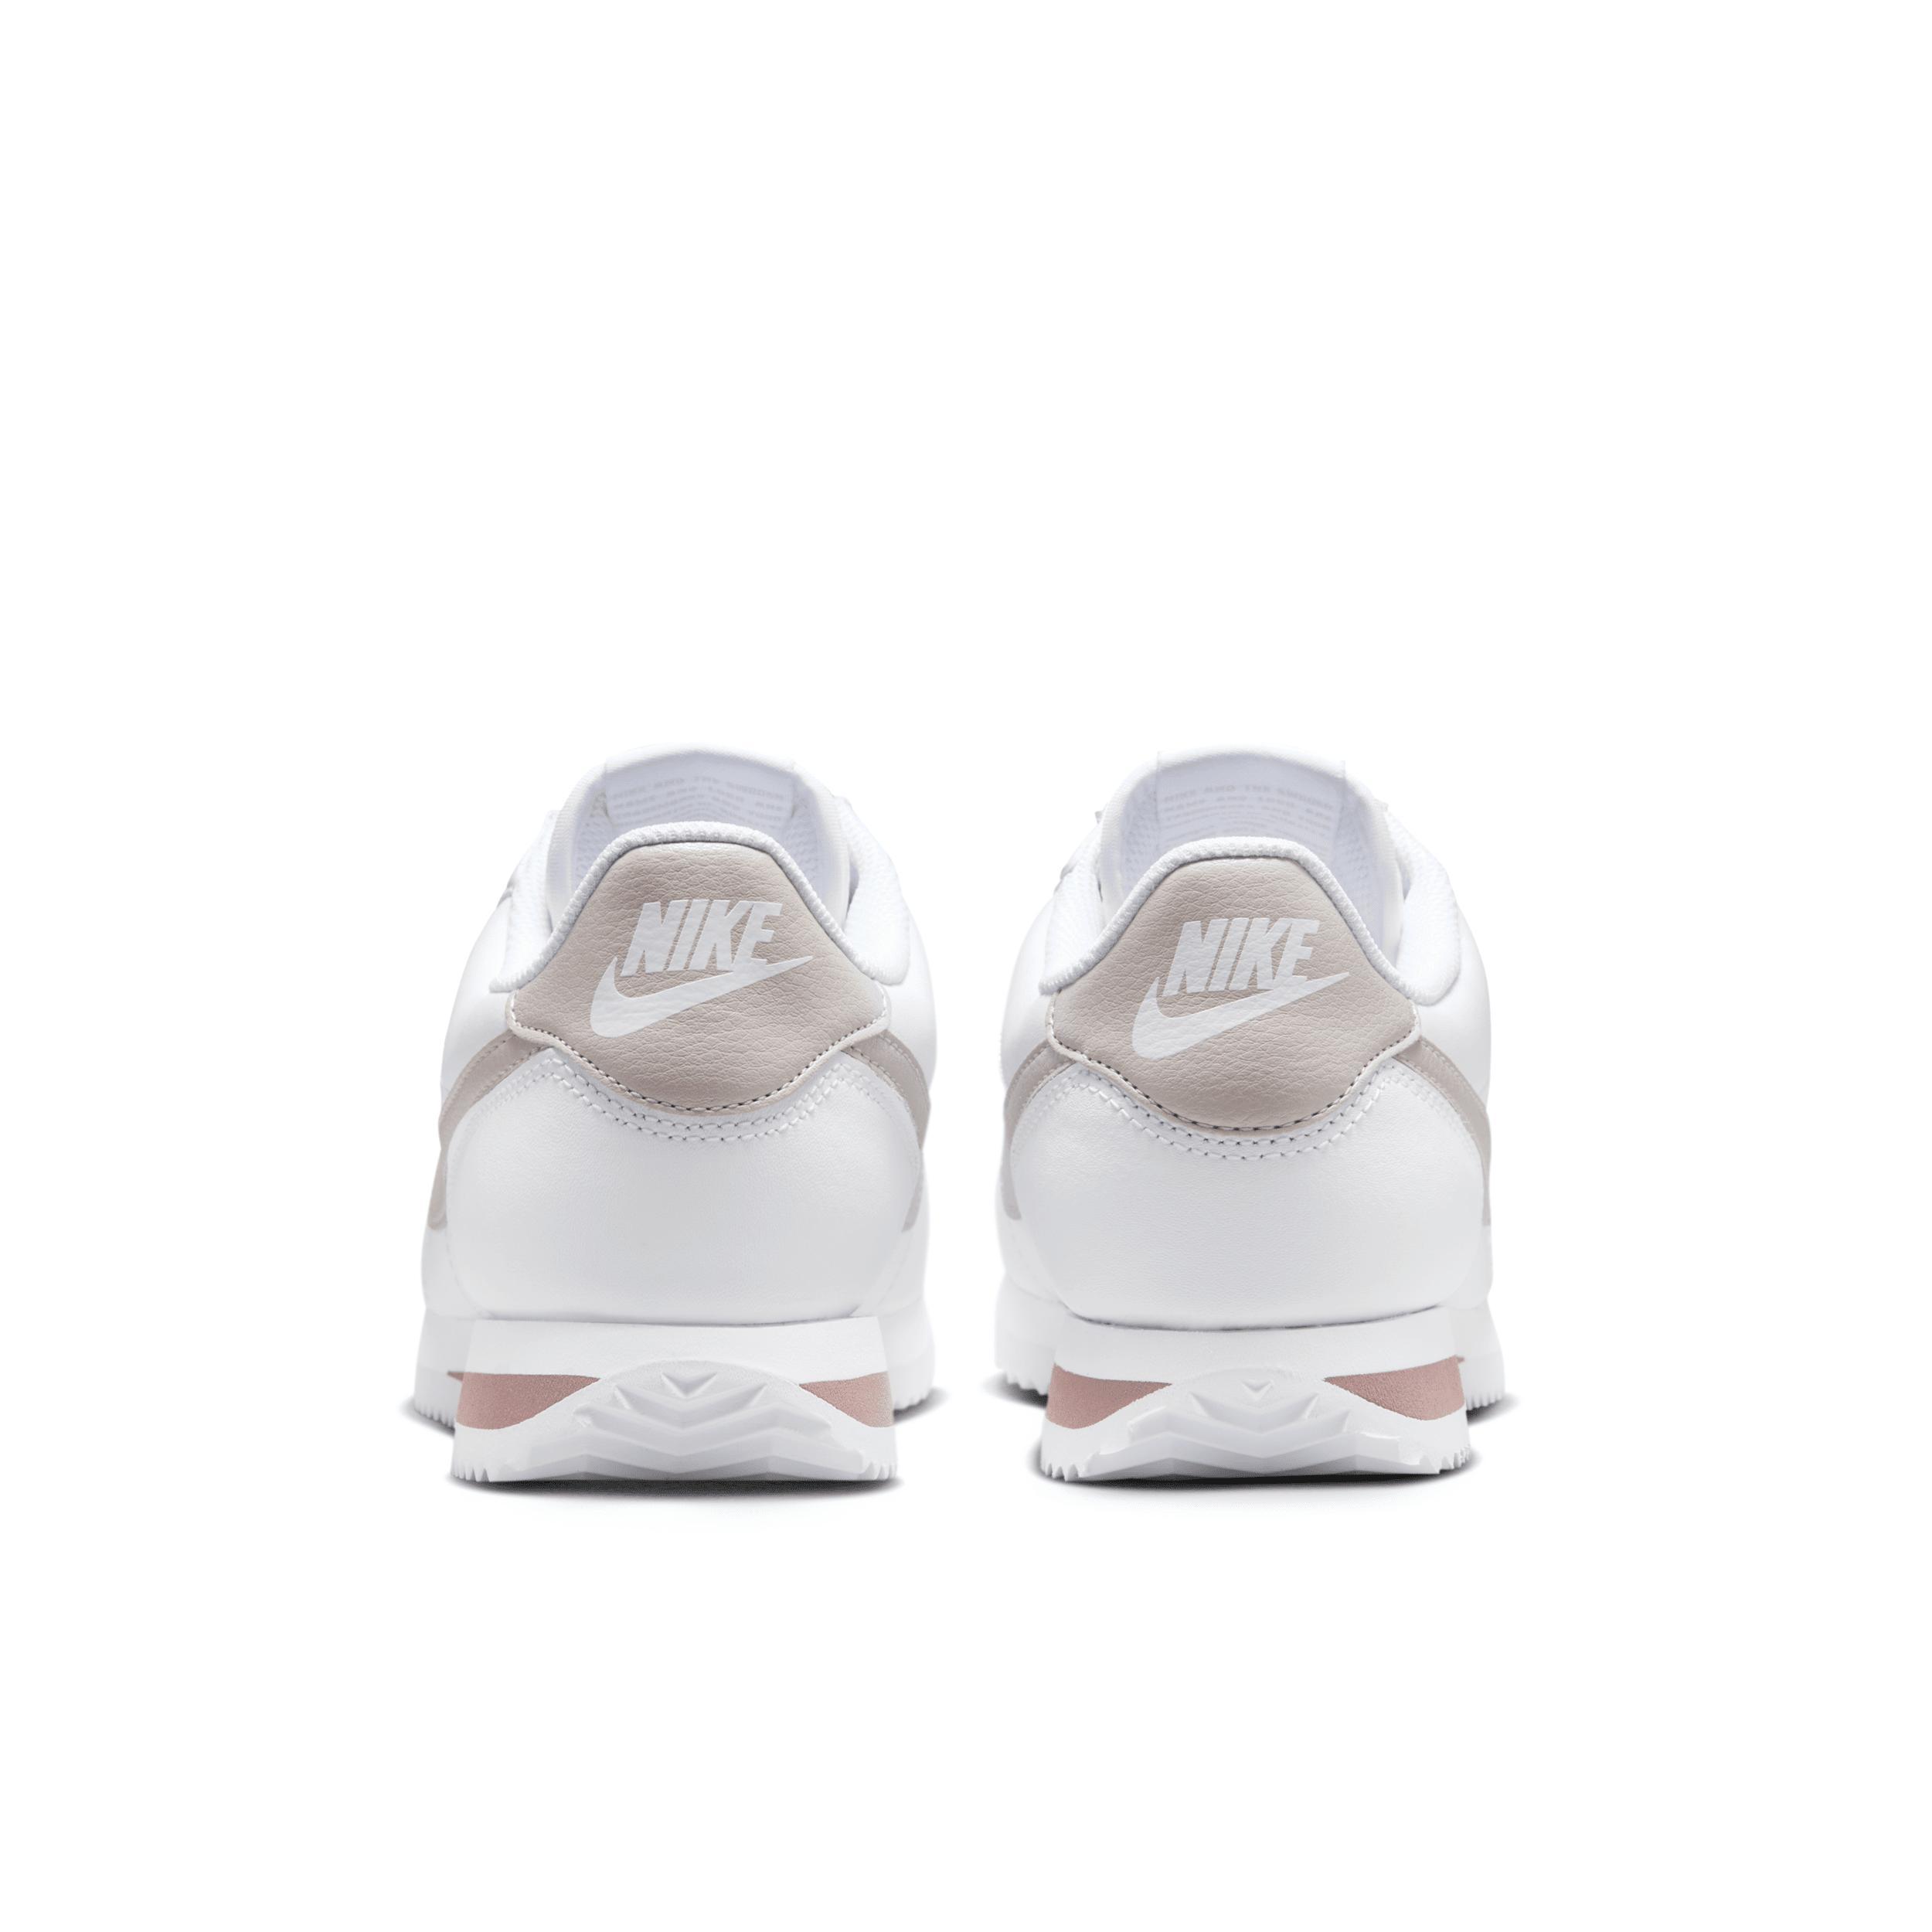 Nike Women's Cortez Shoes Product Image